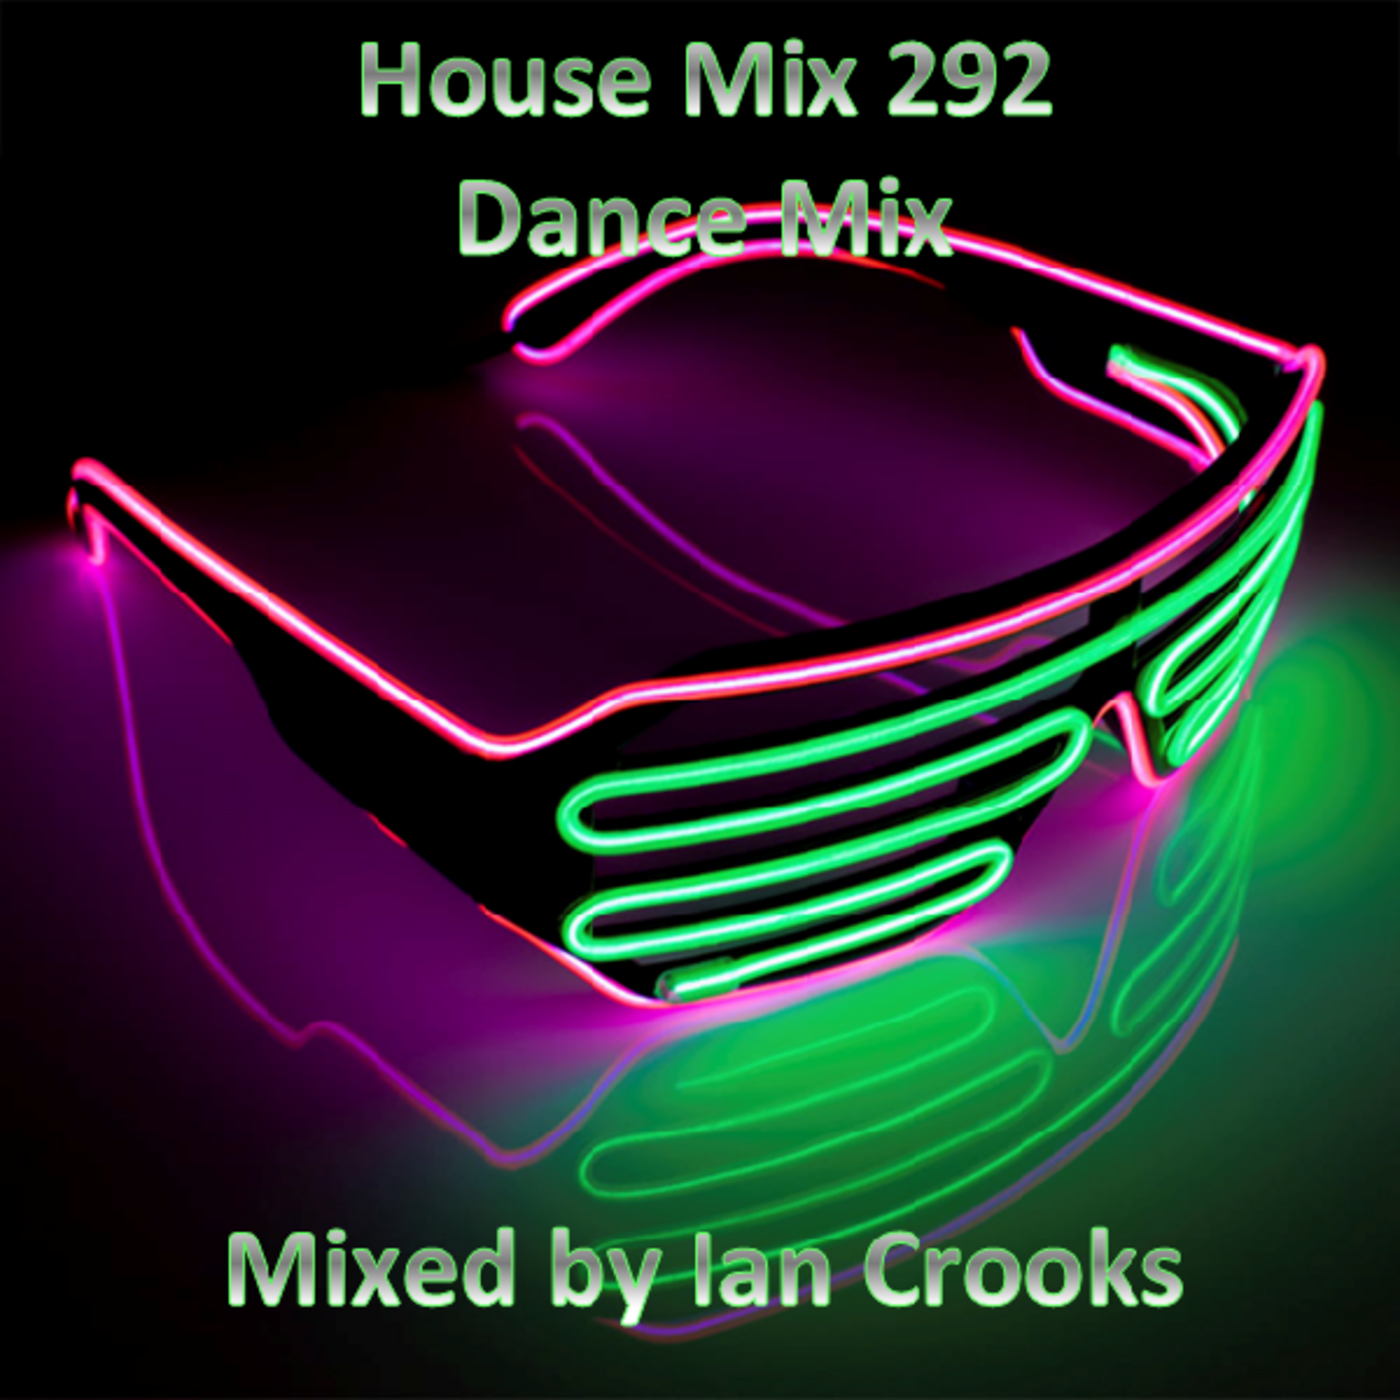 Episode 292: Ian Crooks Mix 292 (Dance Mix)